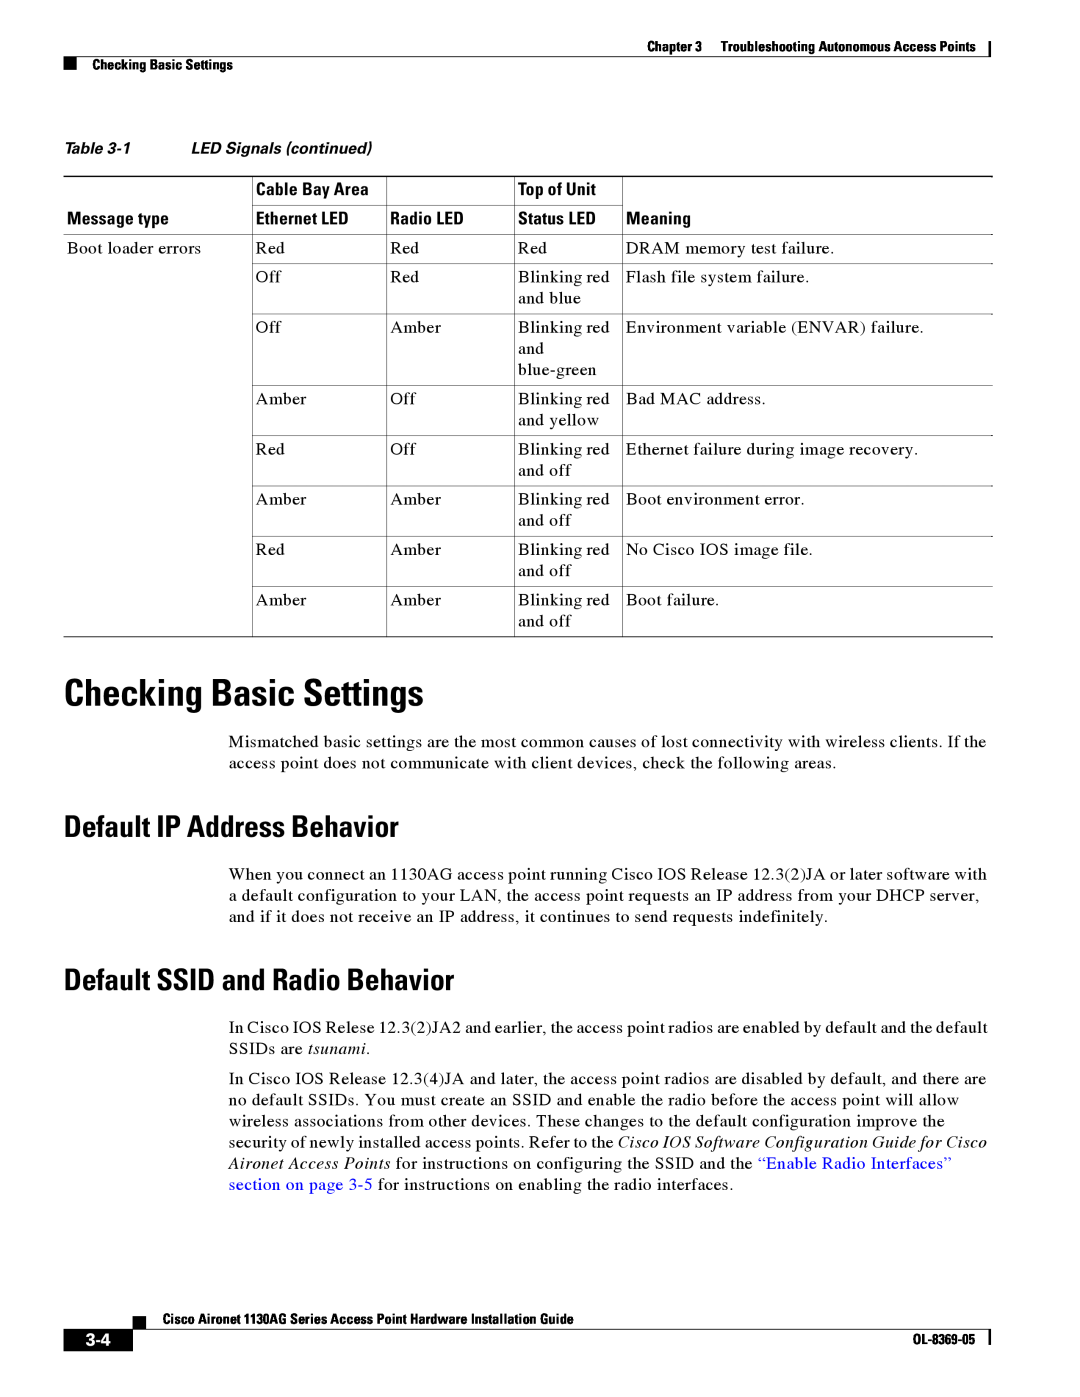 Cisco Systems 1130AG Checking Basic Settings, Default IP Address Behavior, Default SSID and Radio Behavior, Cable Bay Area 